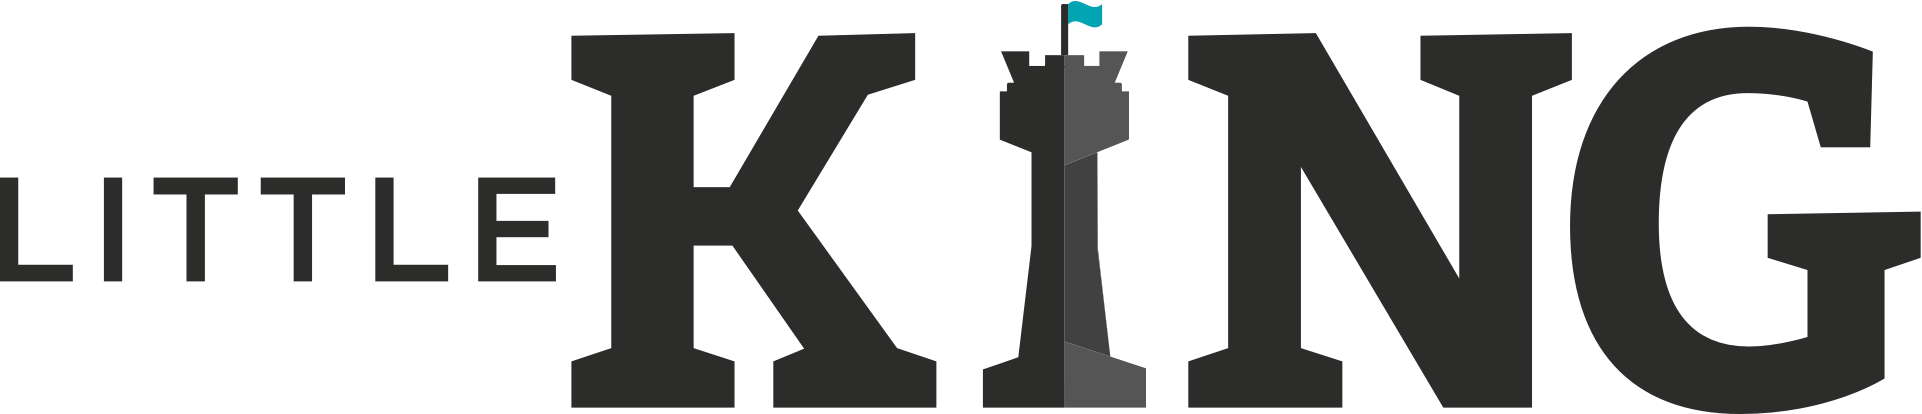 Little King Software logo